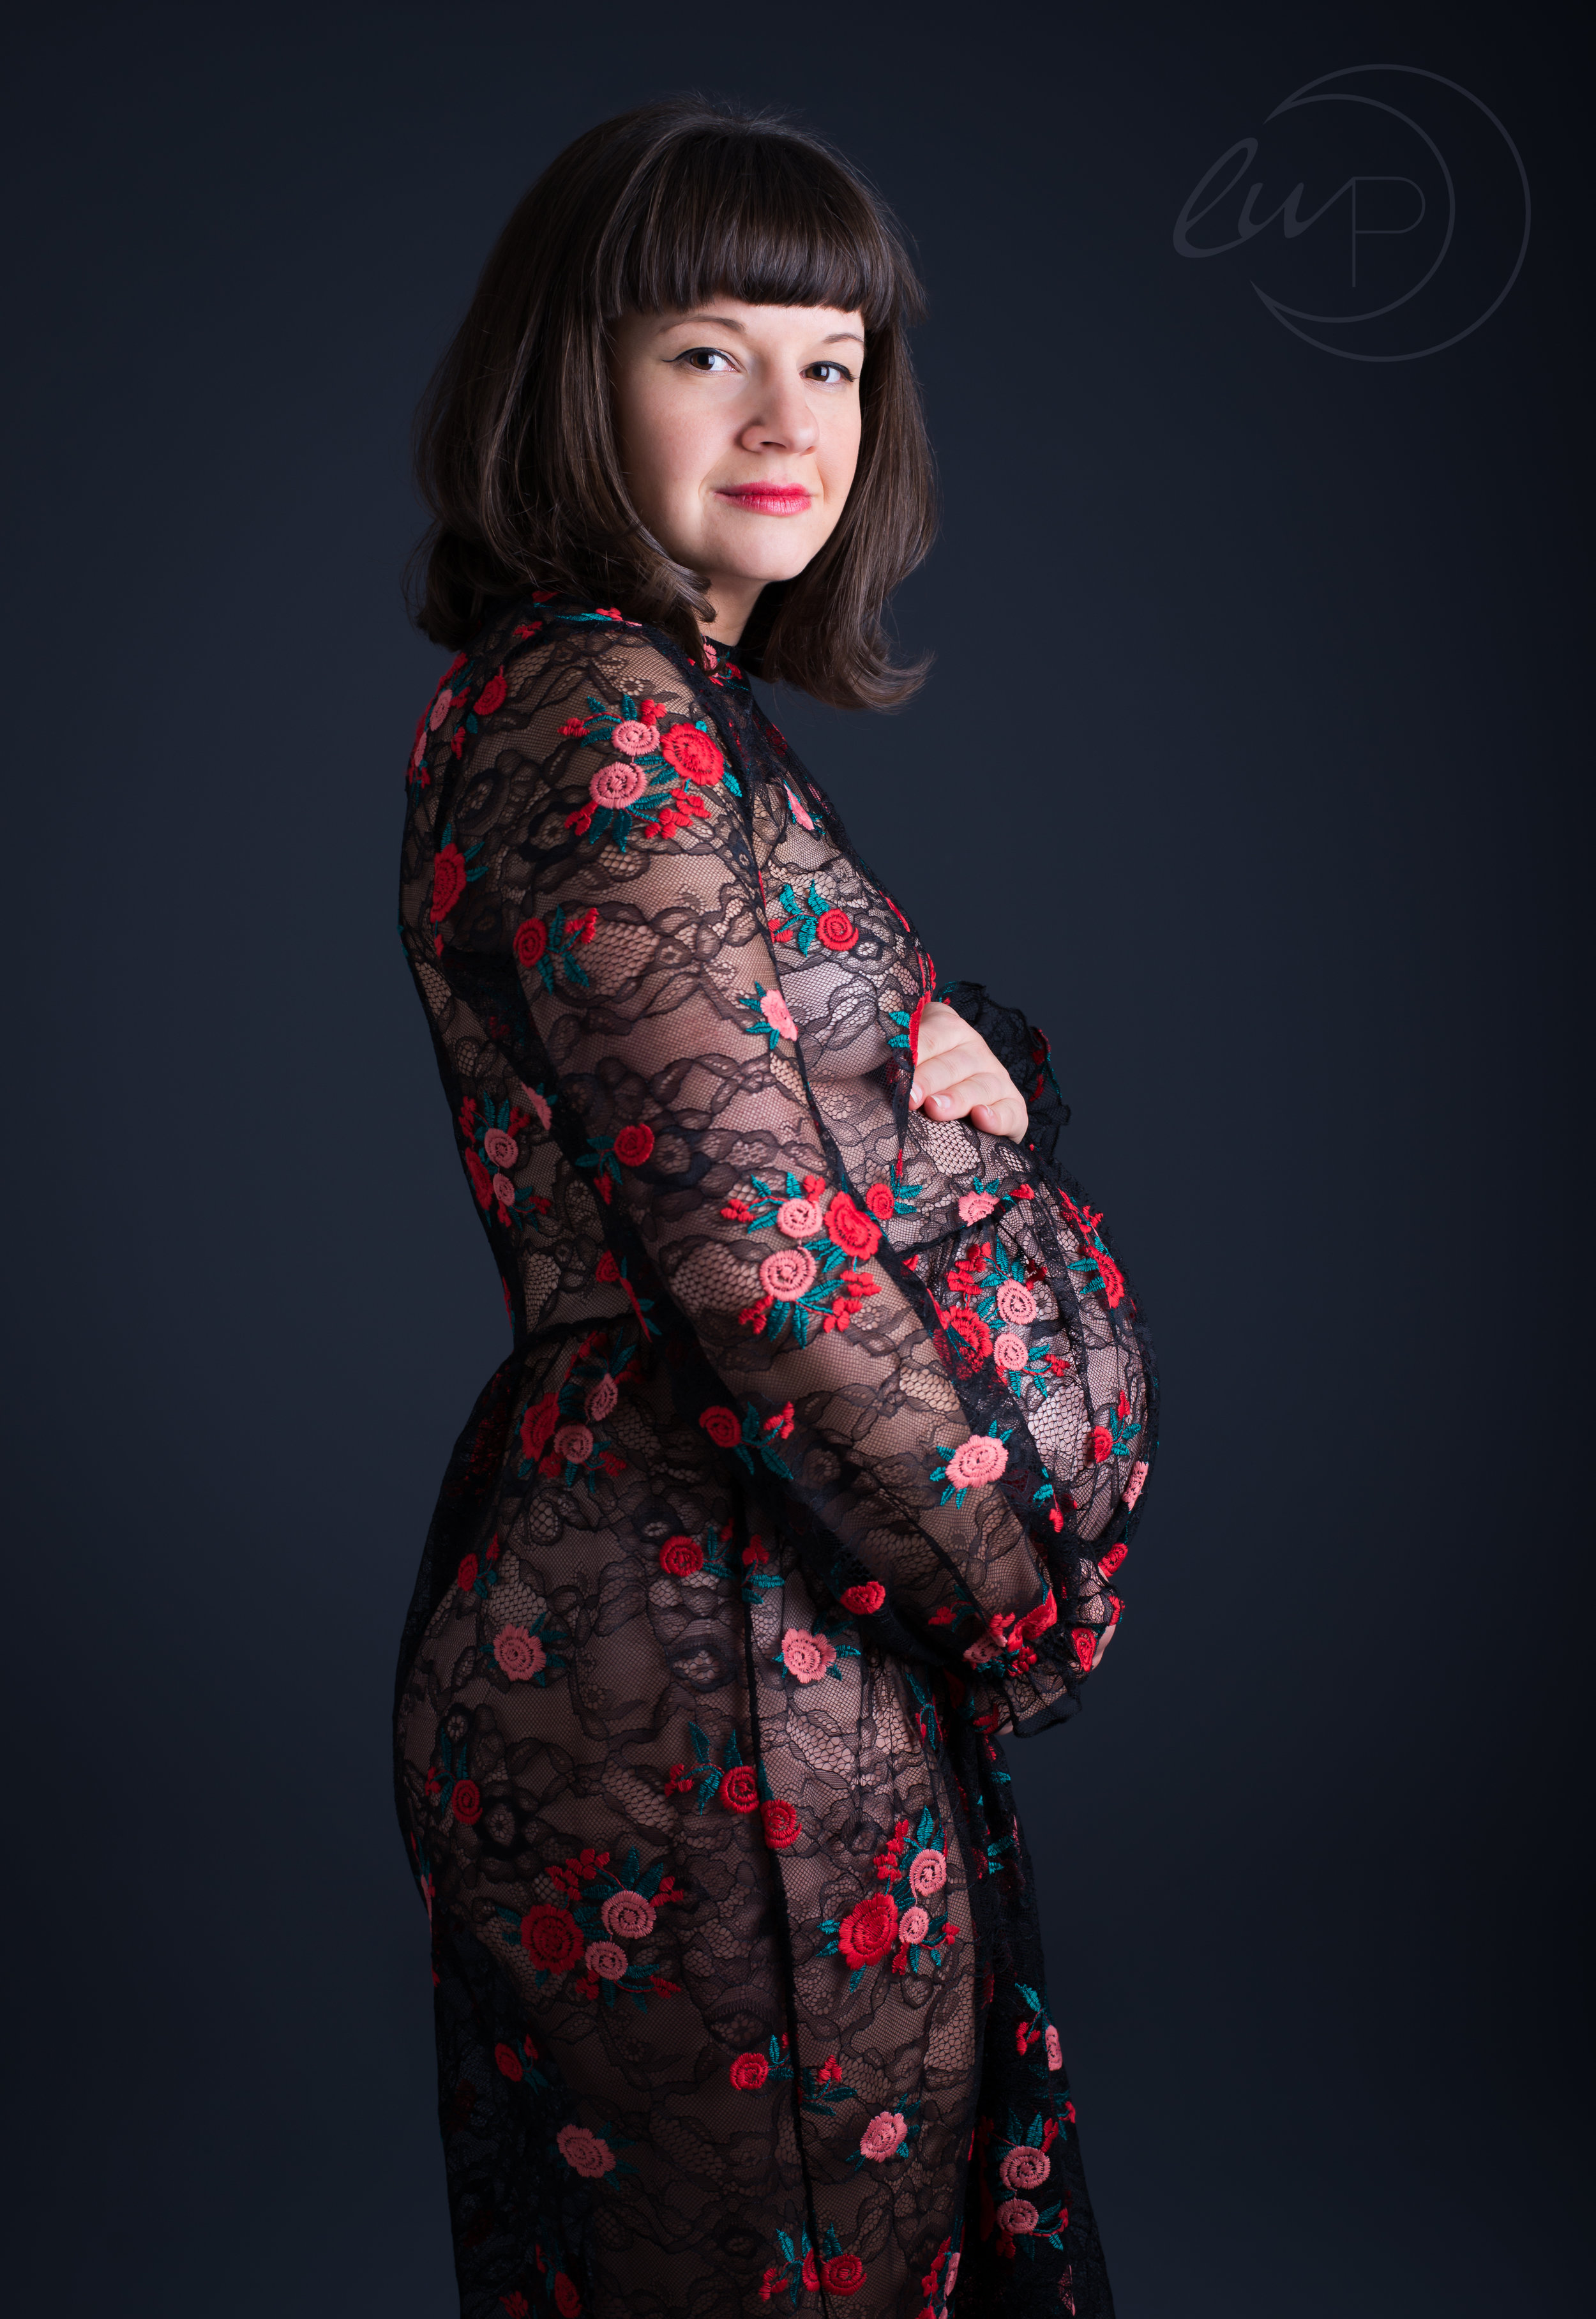 Nicola-maternity-16-Edit-Edit.jpg